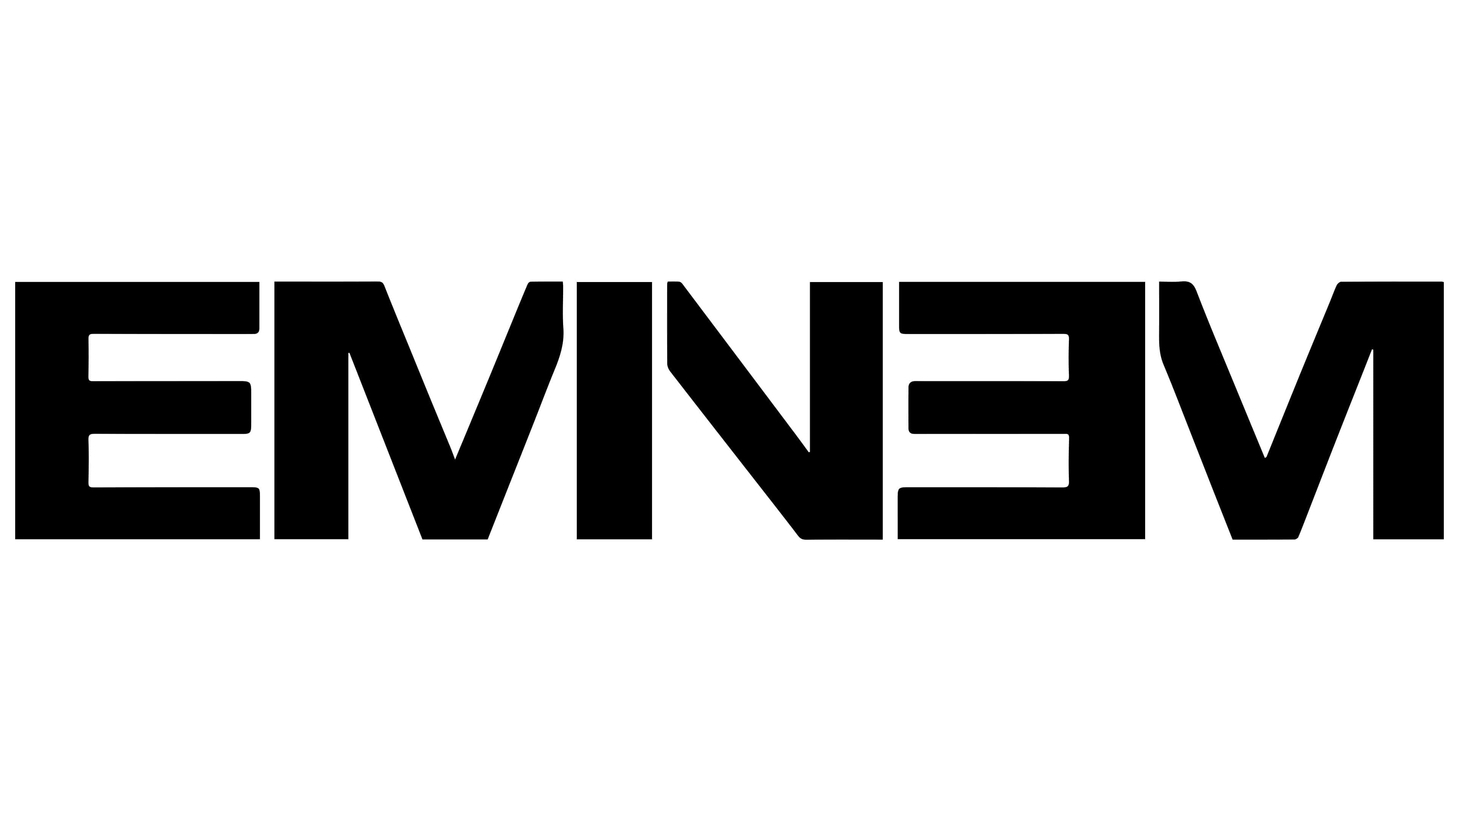 Eminem sign 2013 present